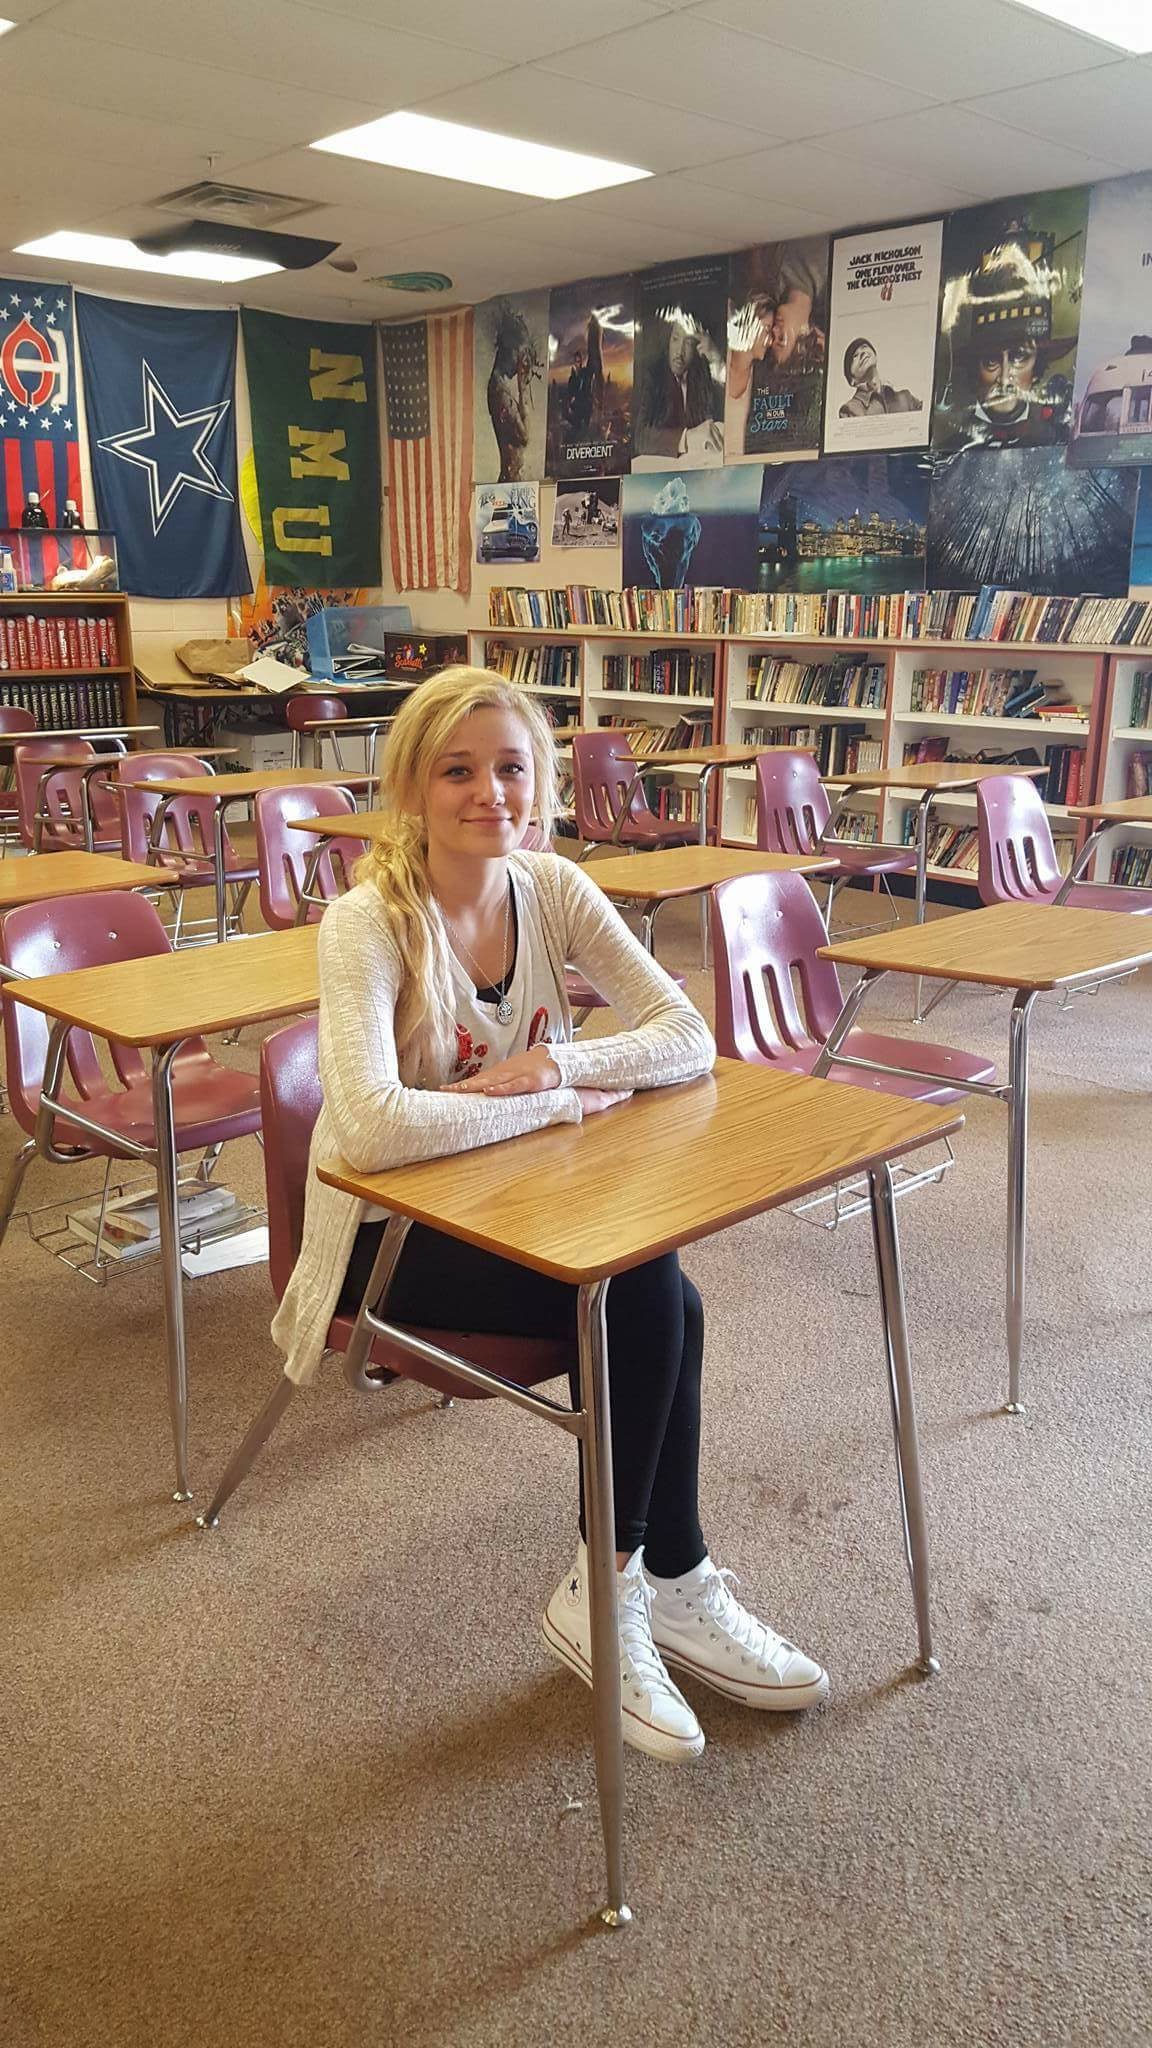 Upper Peninsula high school student Emily Driesenga: “I find myself dozing off sometimes.” 